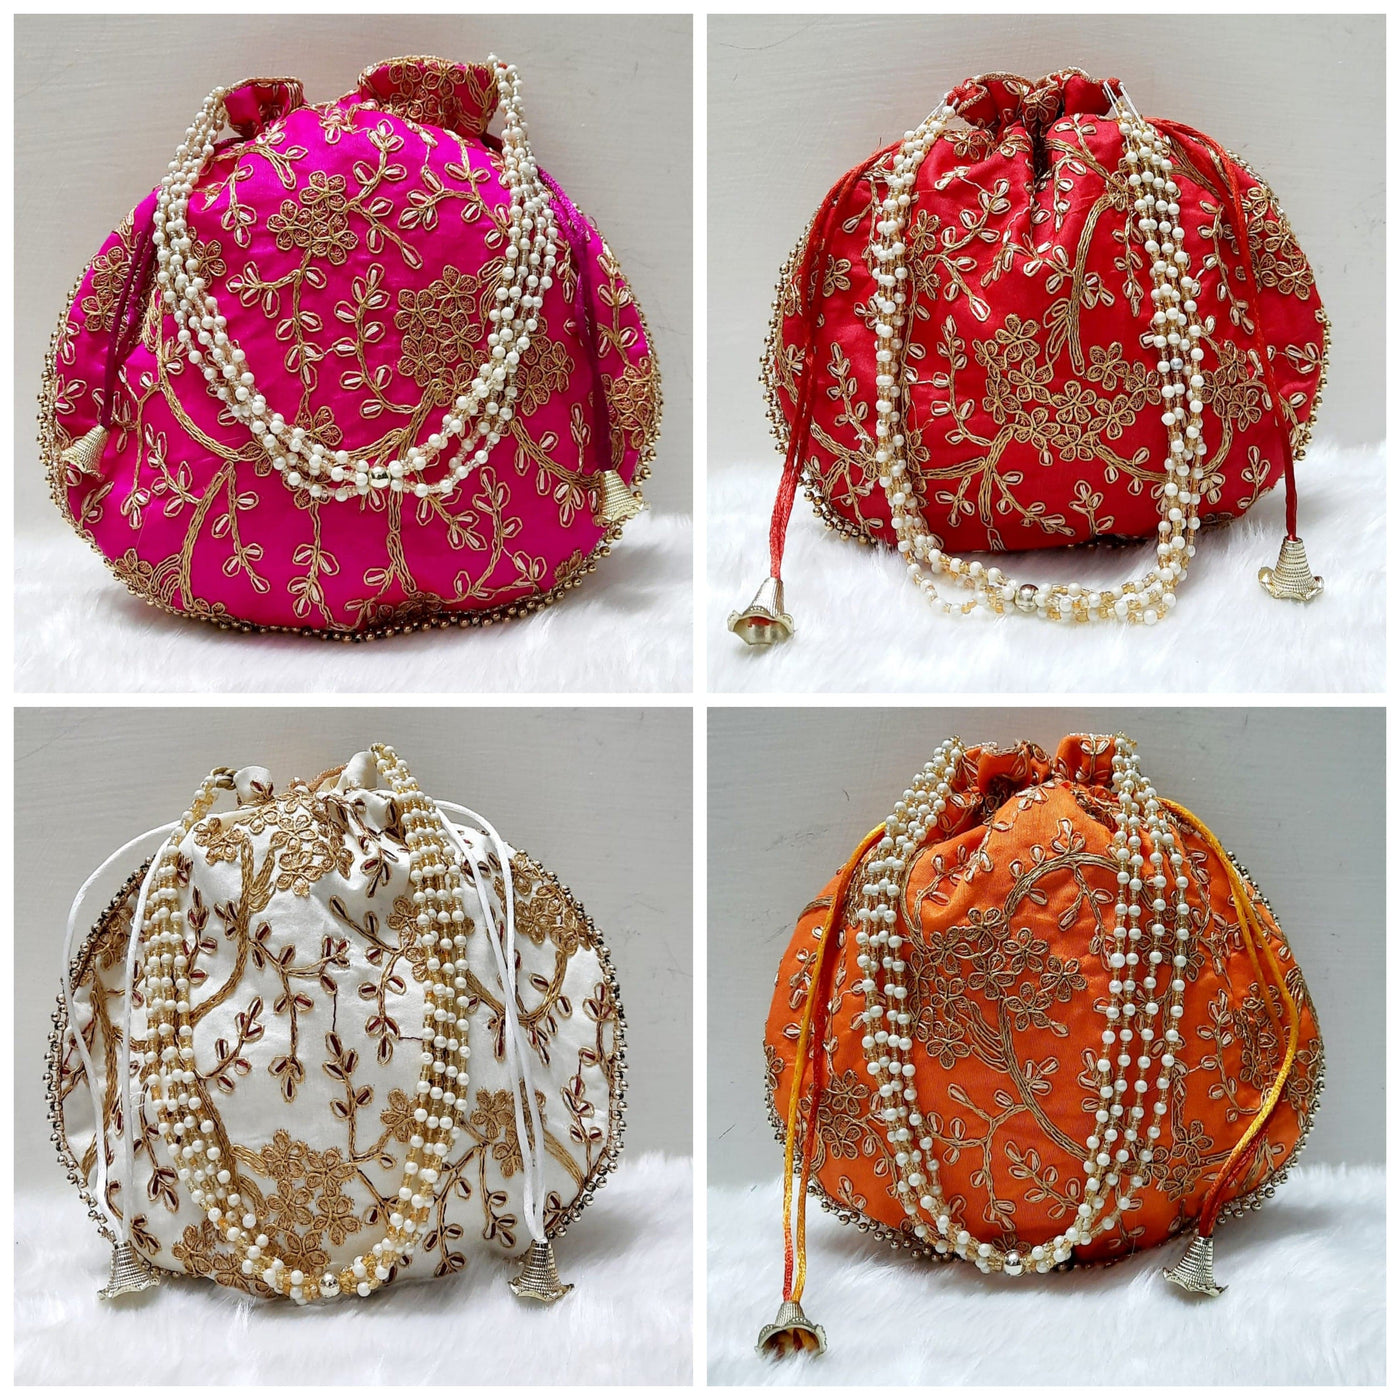 LAMANSH ® Women's Potli Bag Pack of 20 LAMANSH Pack of 20 Pcs Matka Style Tree Pattern Potli bags for women handbags traditional Indian Wristlet